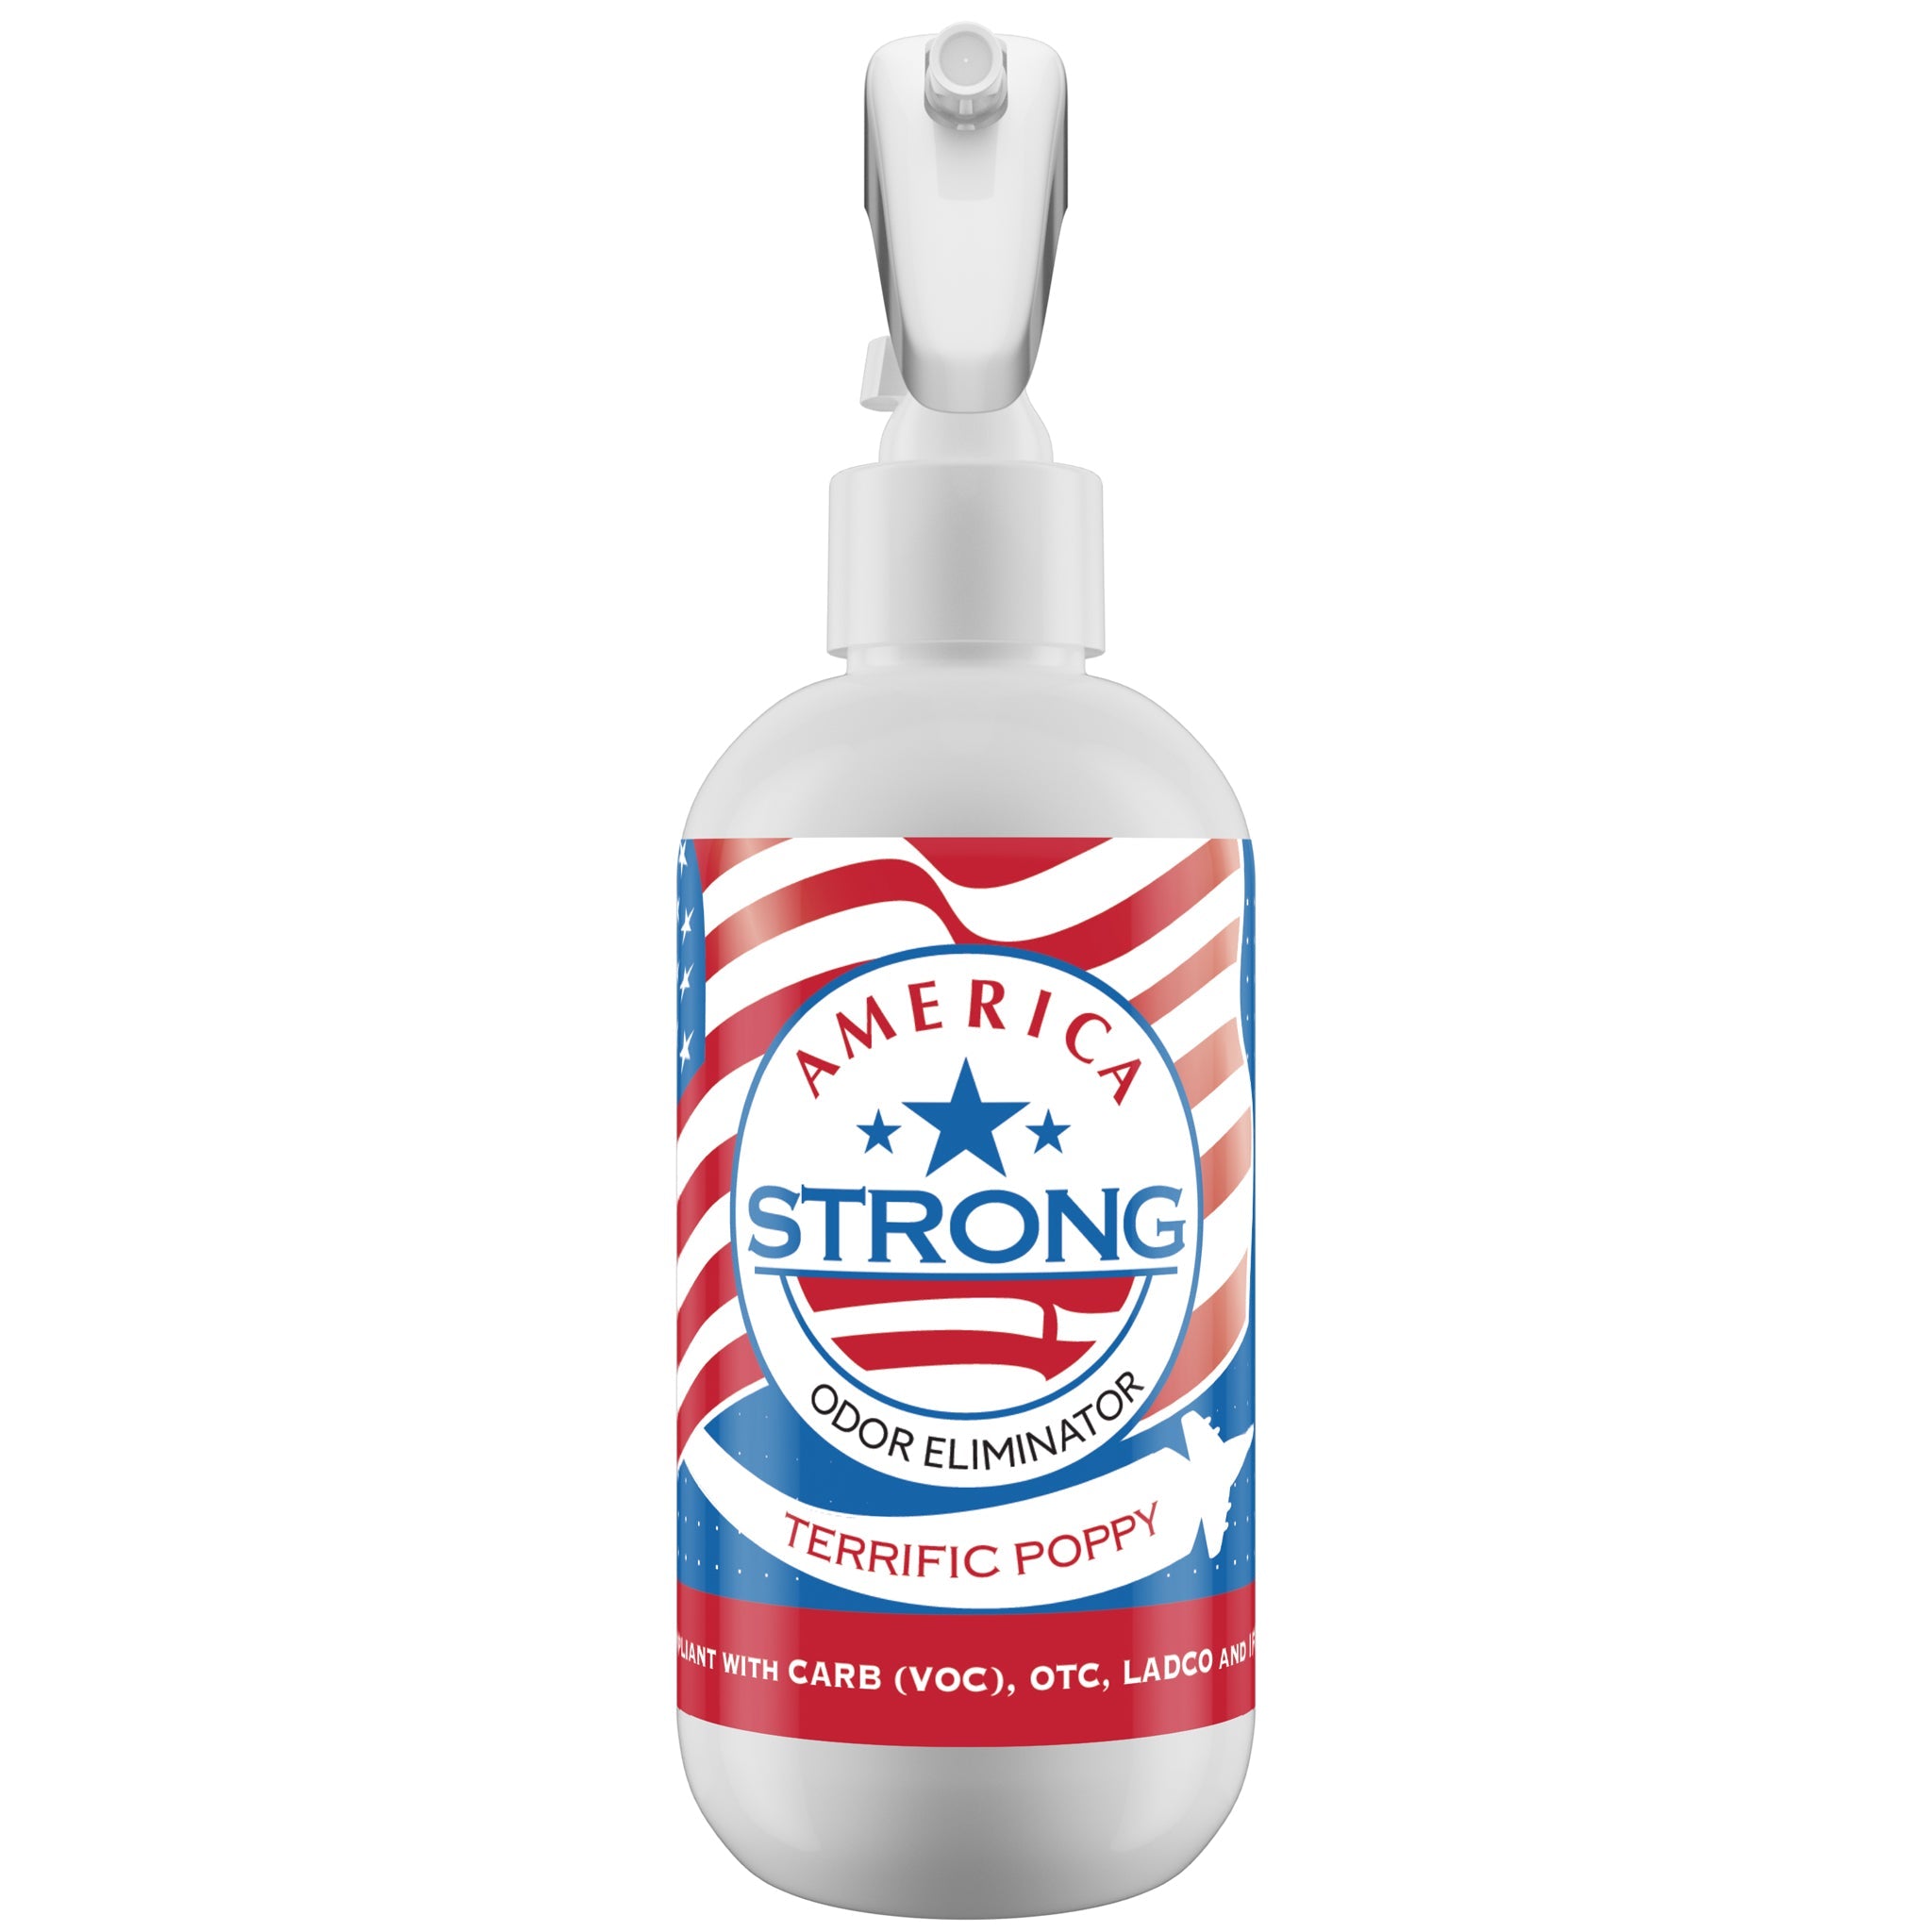 America Strong Odor Eliminator - Terrific Poppy Scent Size: 8.0oz